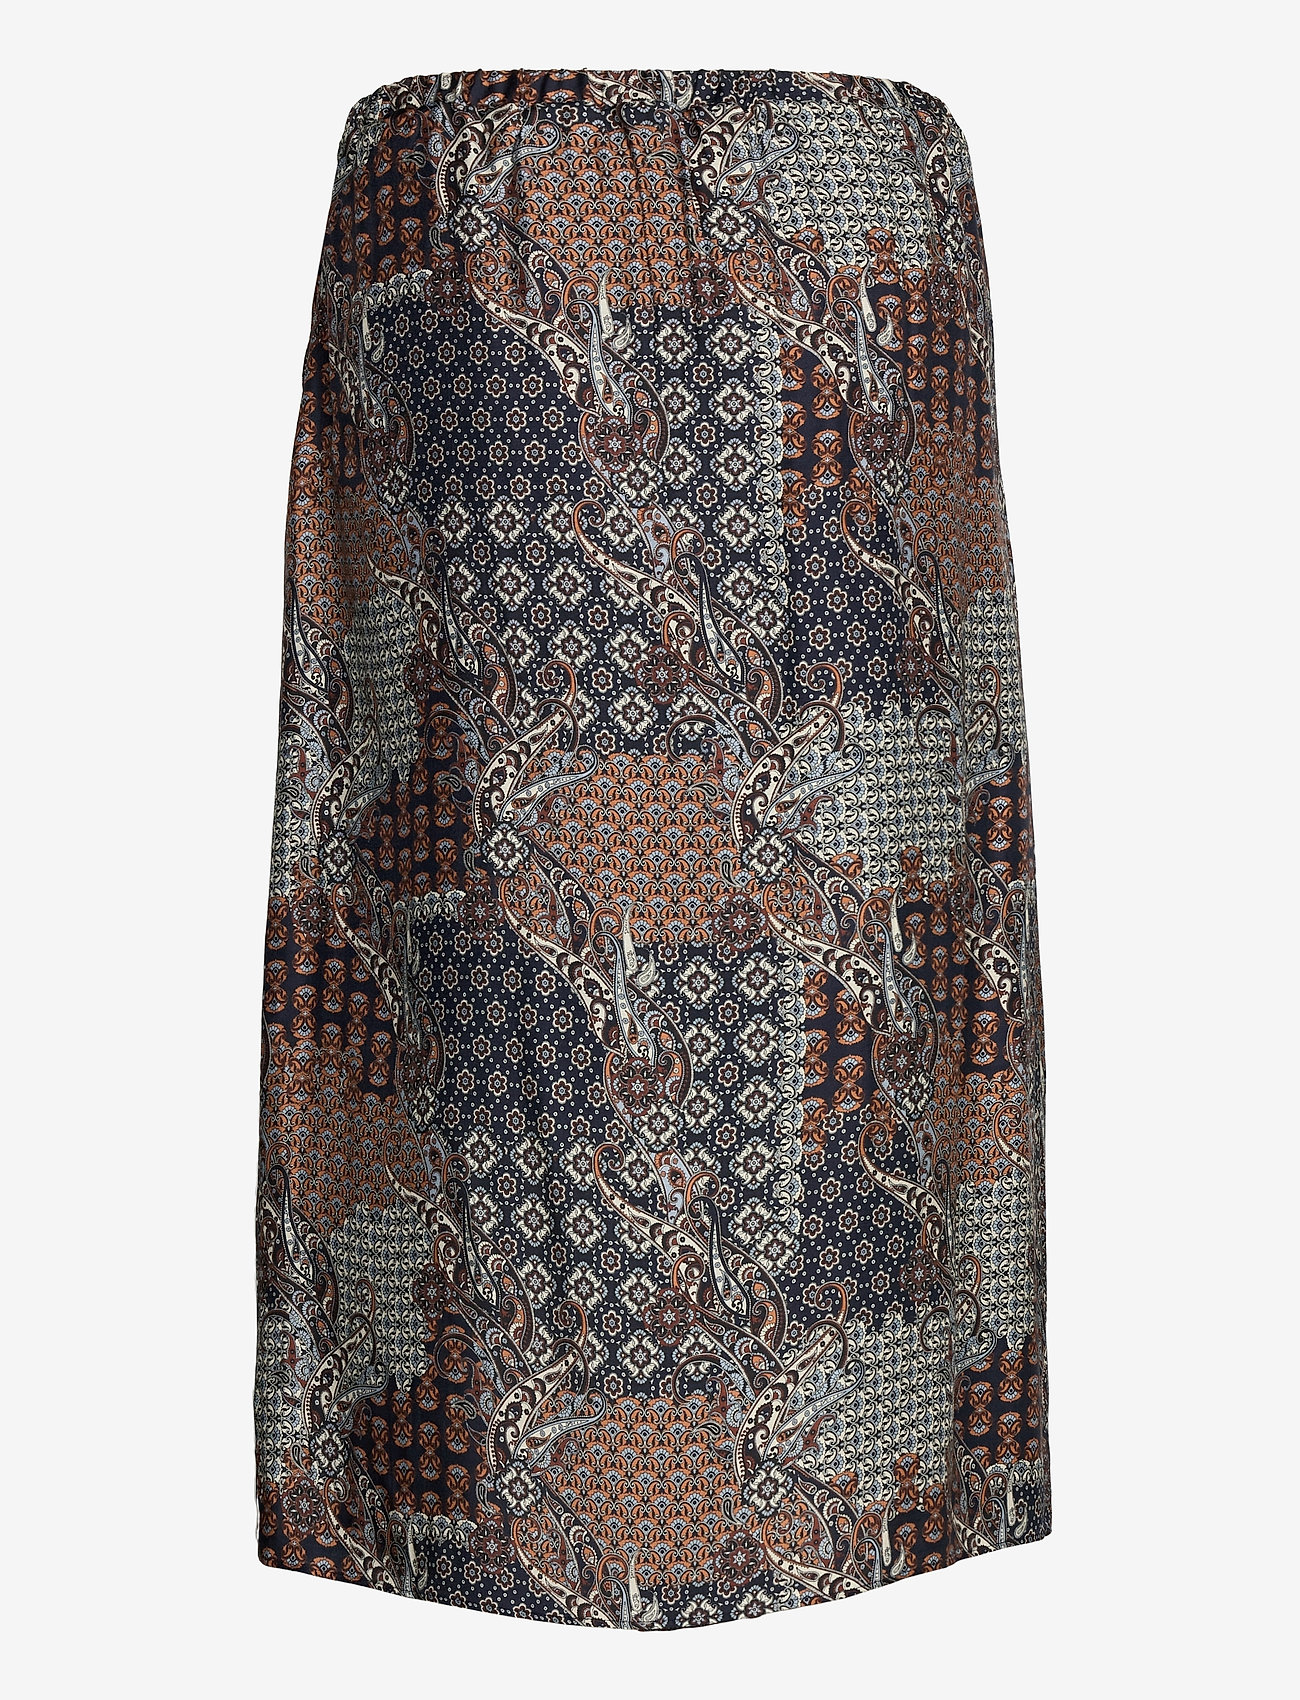 SAND - 3424 - Wrap Skirt - pattern - 1